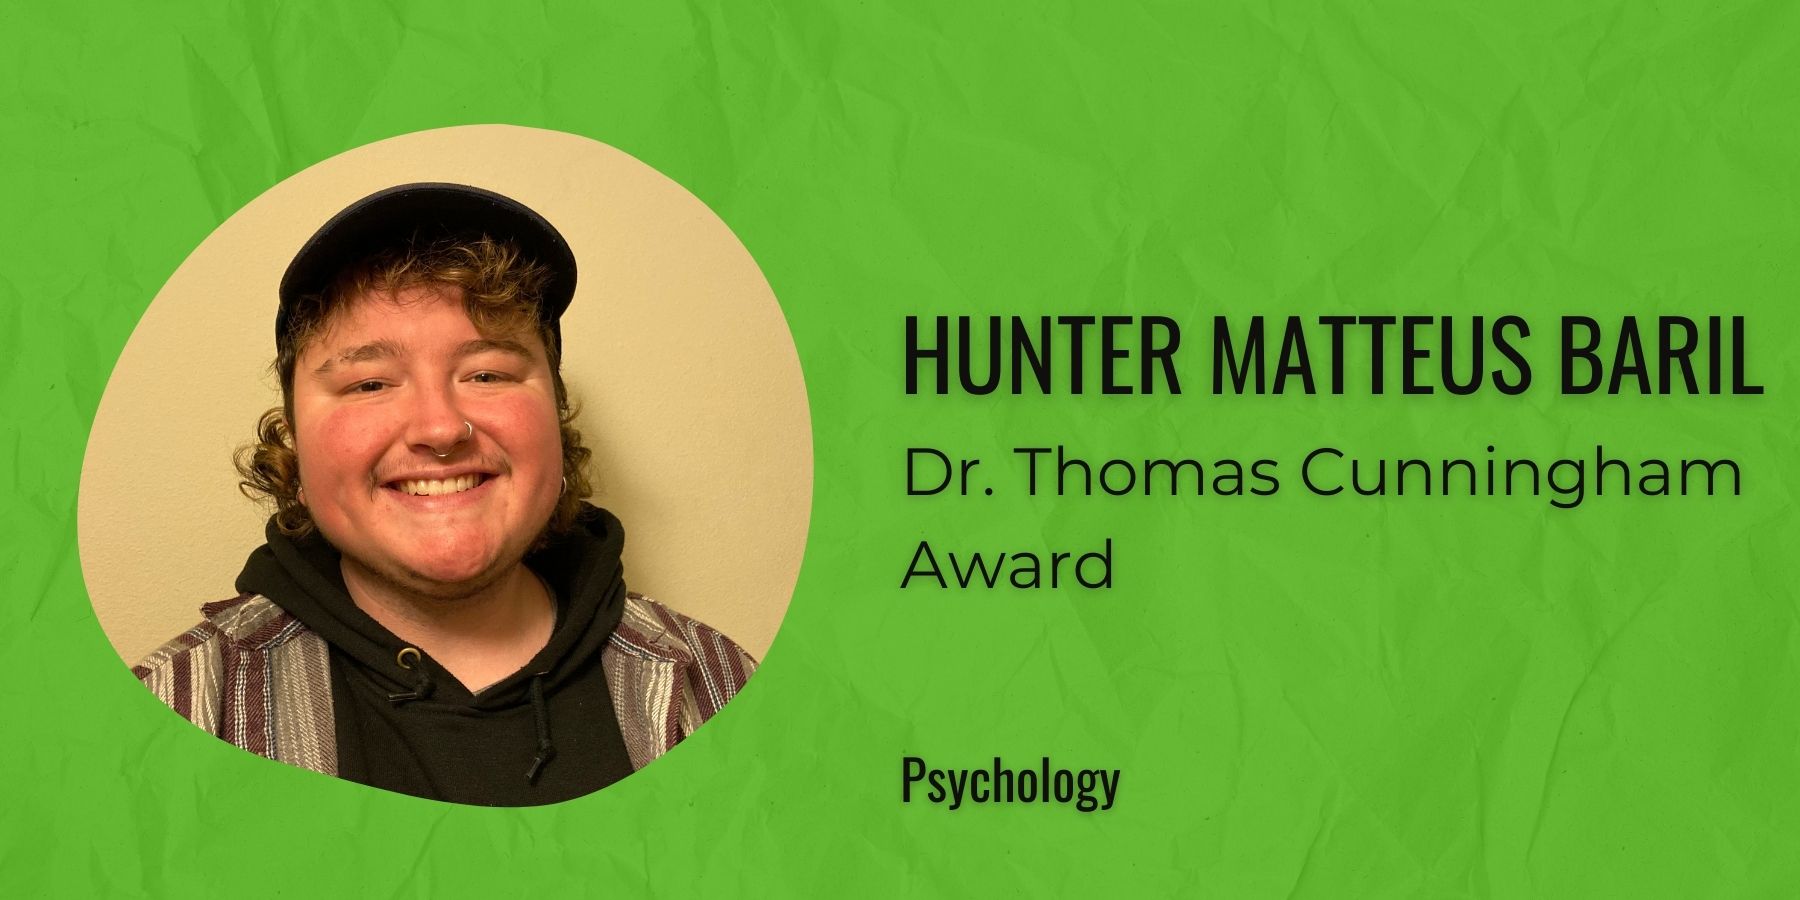 Image of Hunter Matteus Baril with text: Dr. Thomas Cunningham Award, Psychology
